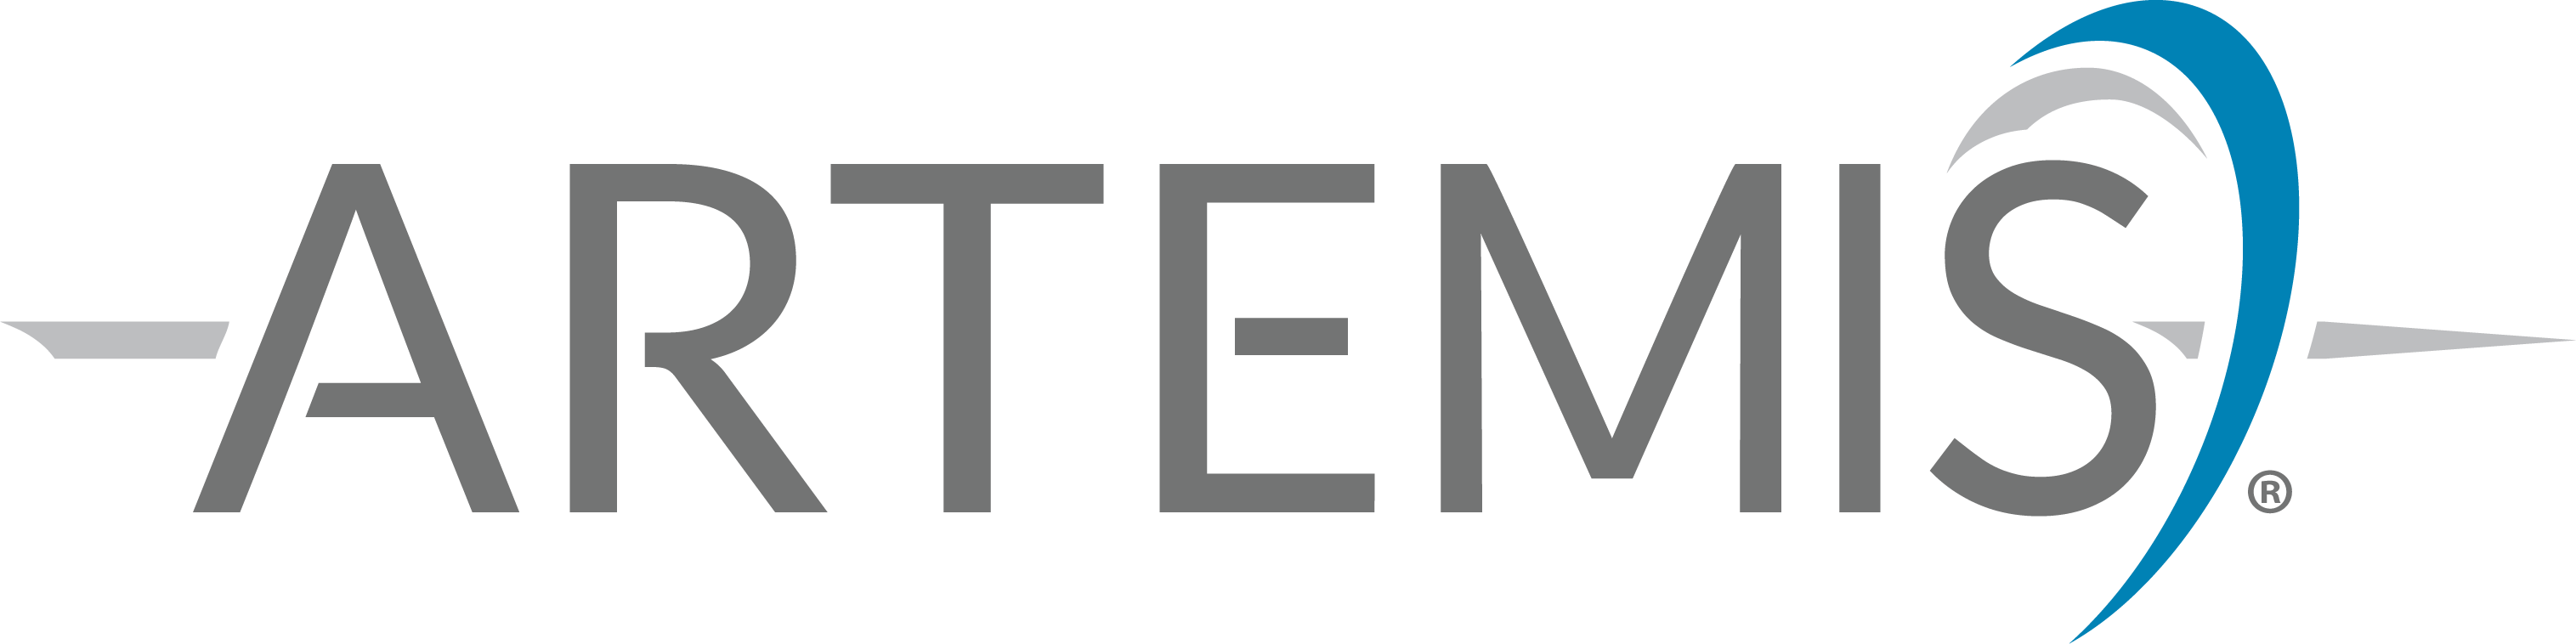 New ARTEMIS logo 2016 FINAL